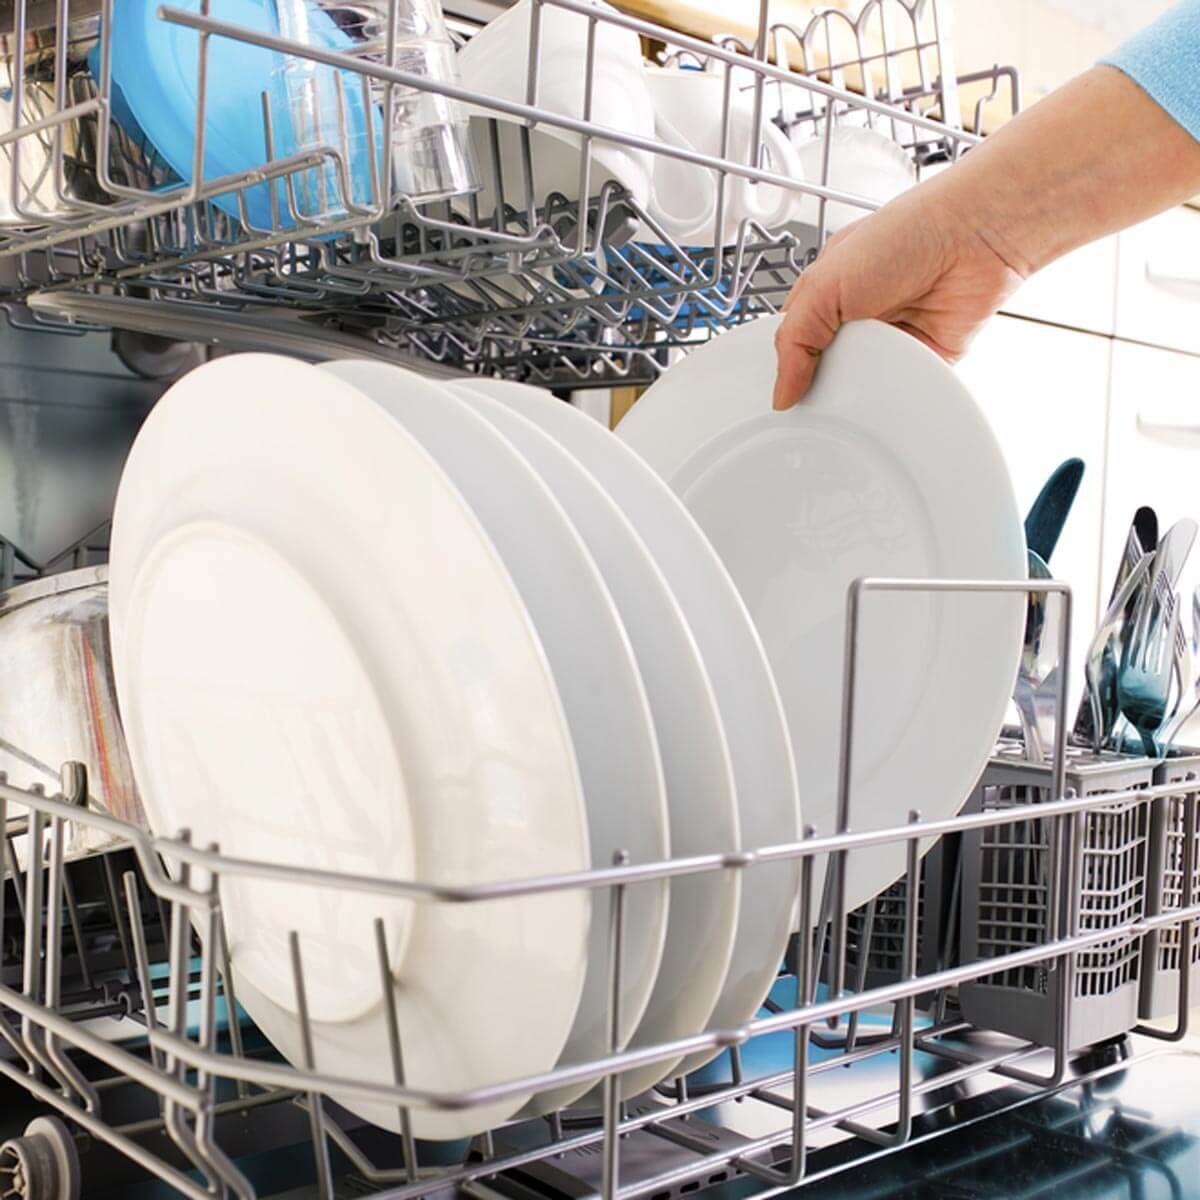 shutterstock_53629048 dishwasher clean plates